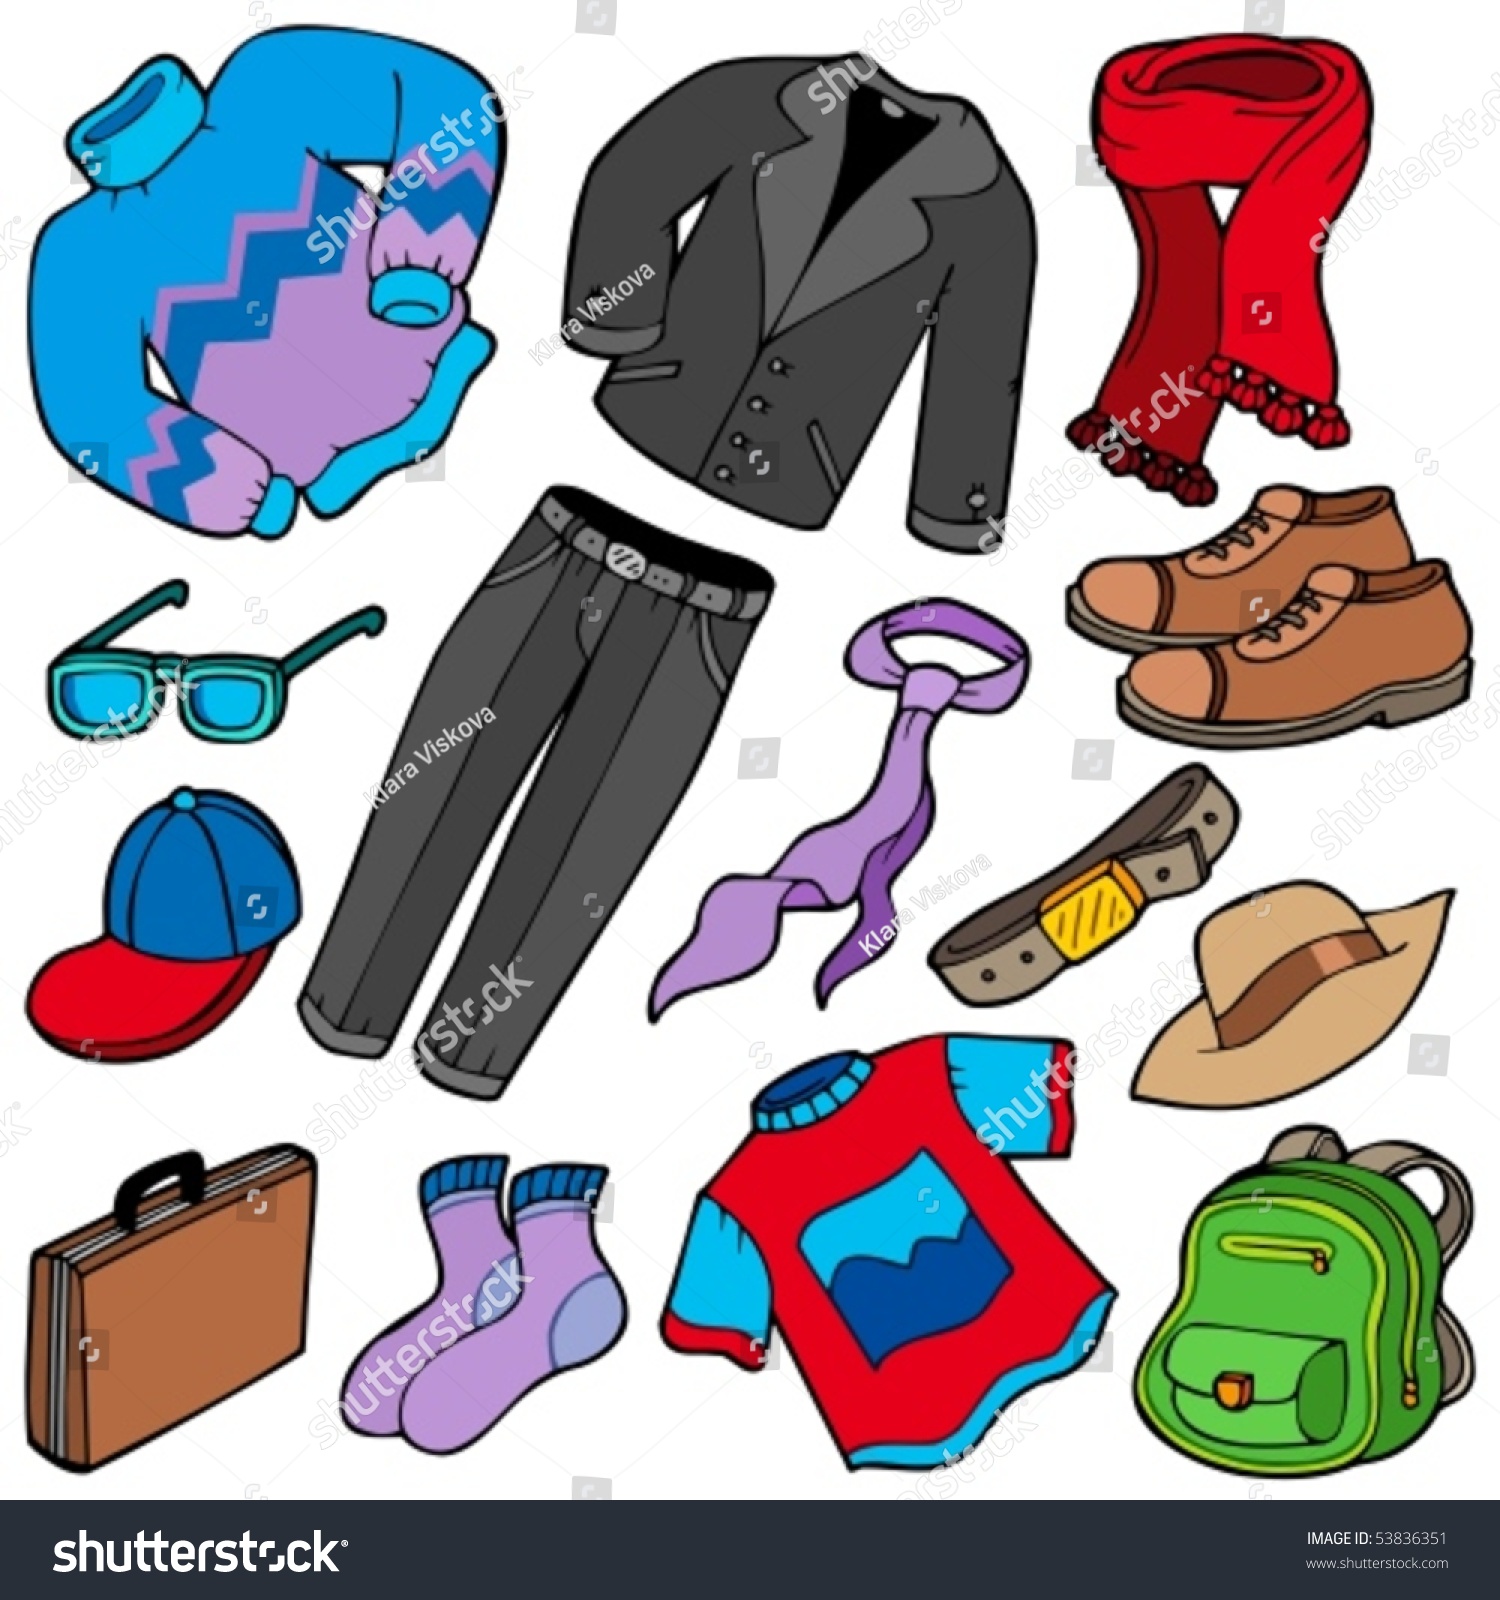 Men Apparel Collection - Vector Illustration. - 53836351 : Shutterstock